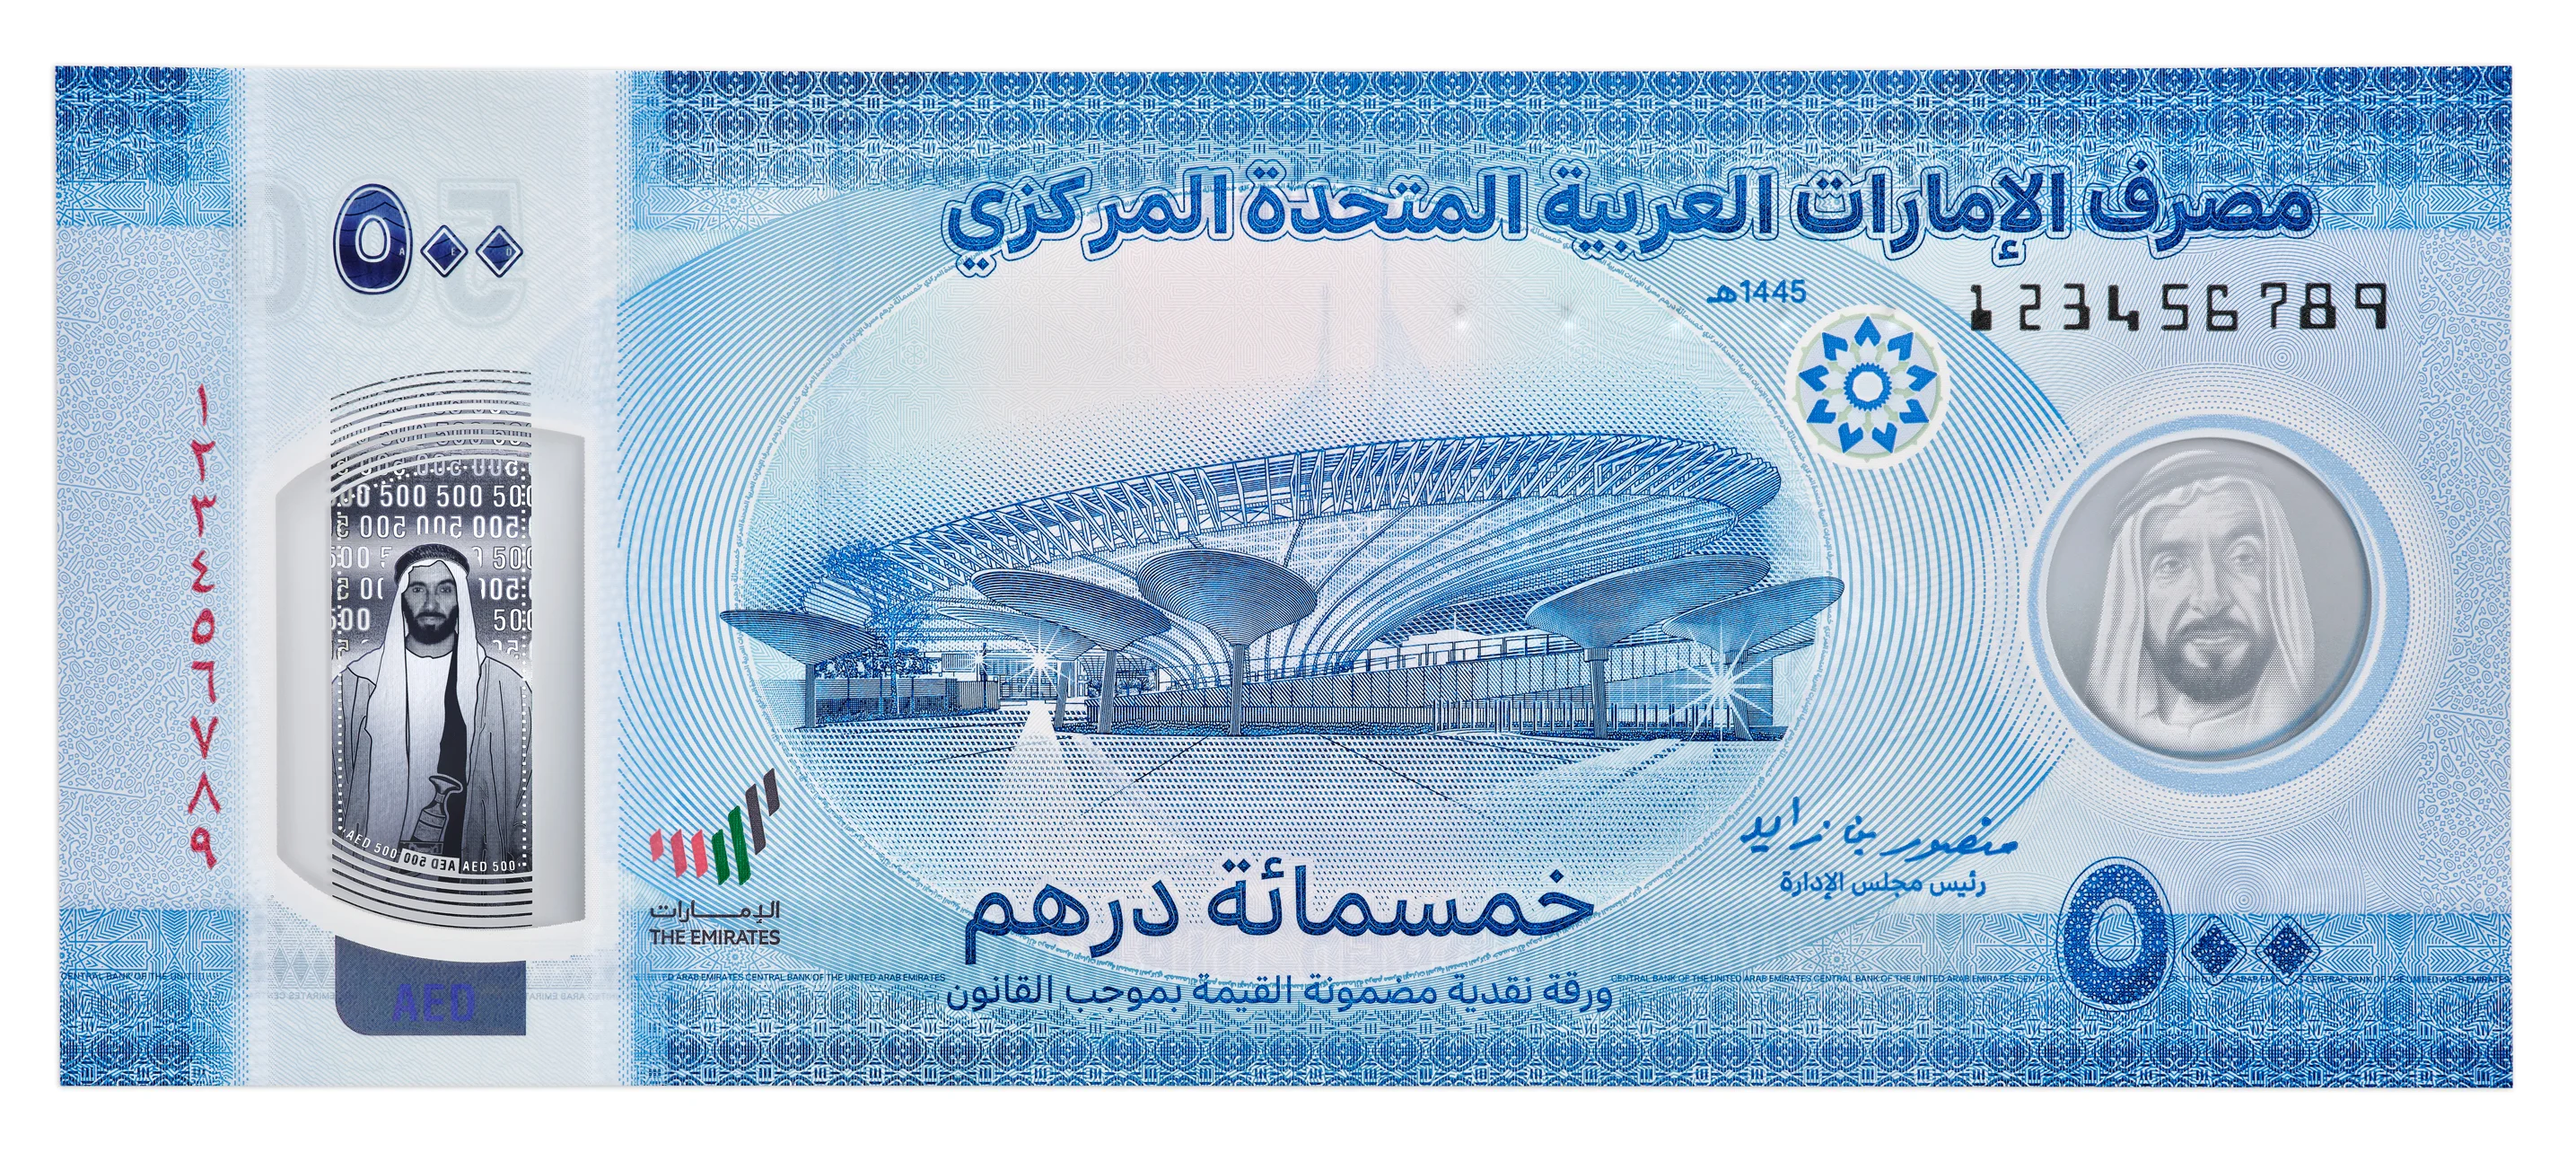 500 dirham note - Arabic side